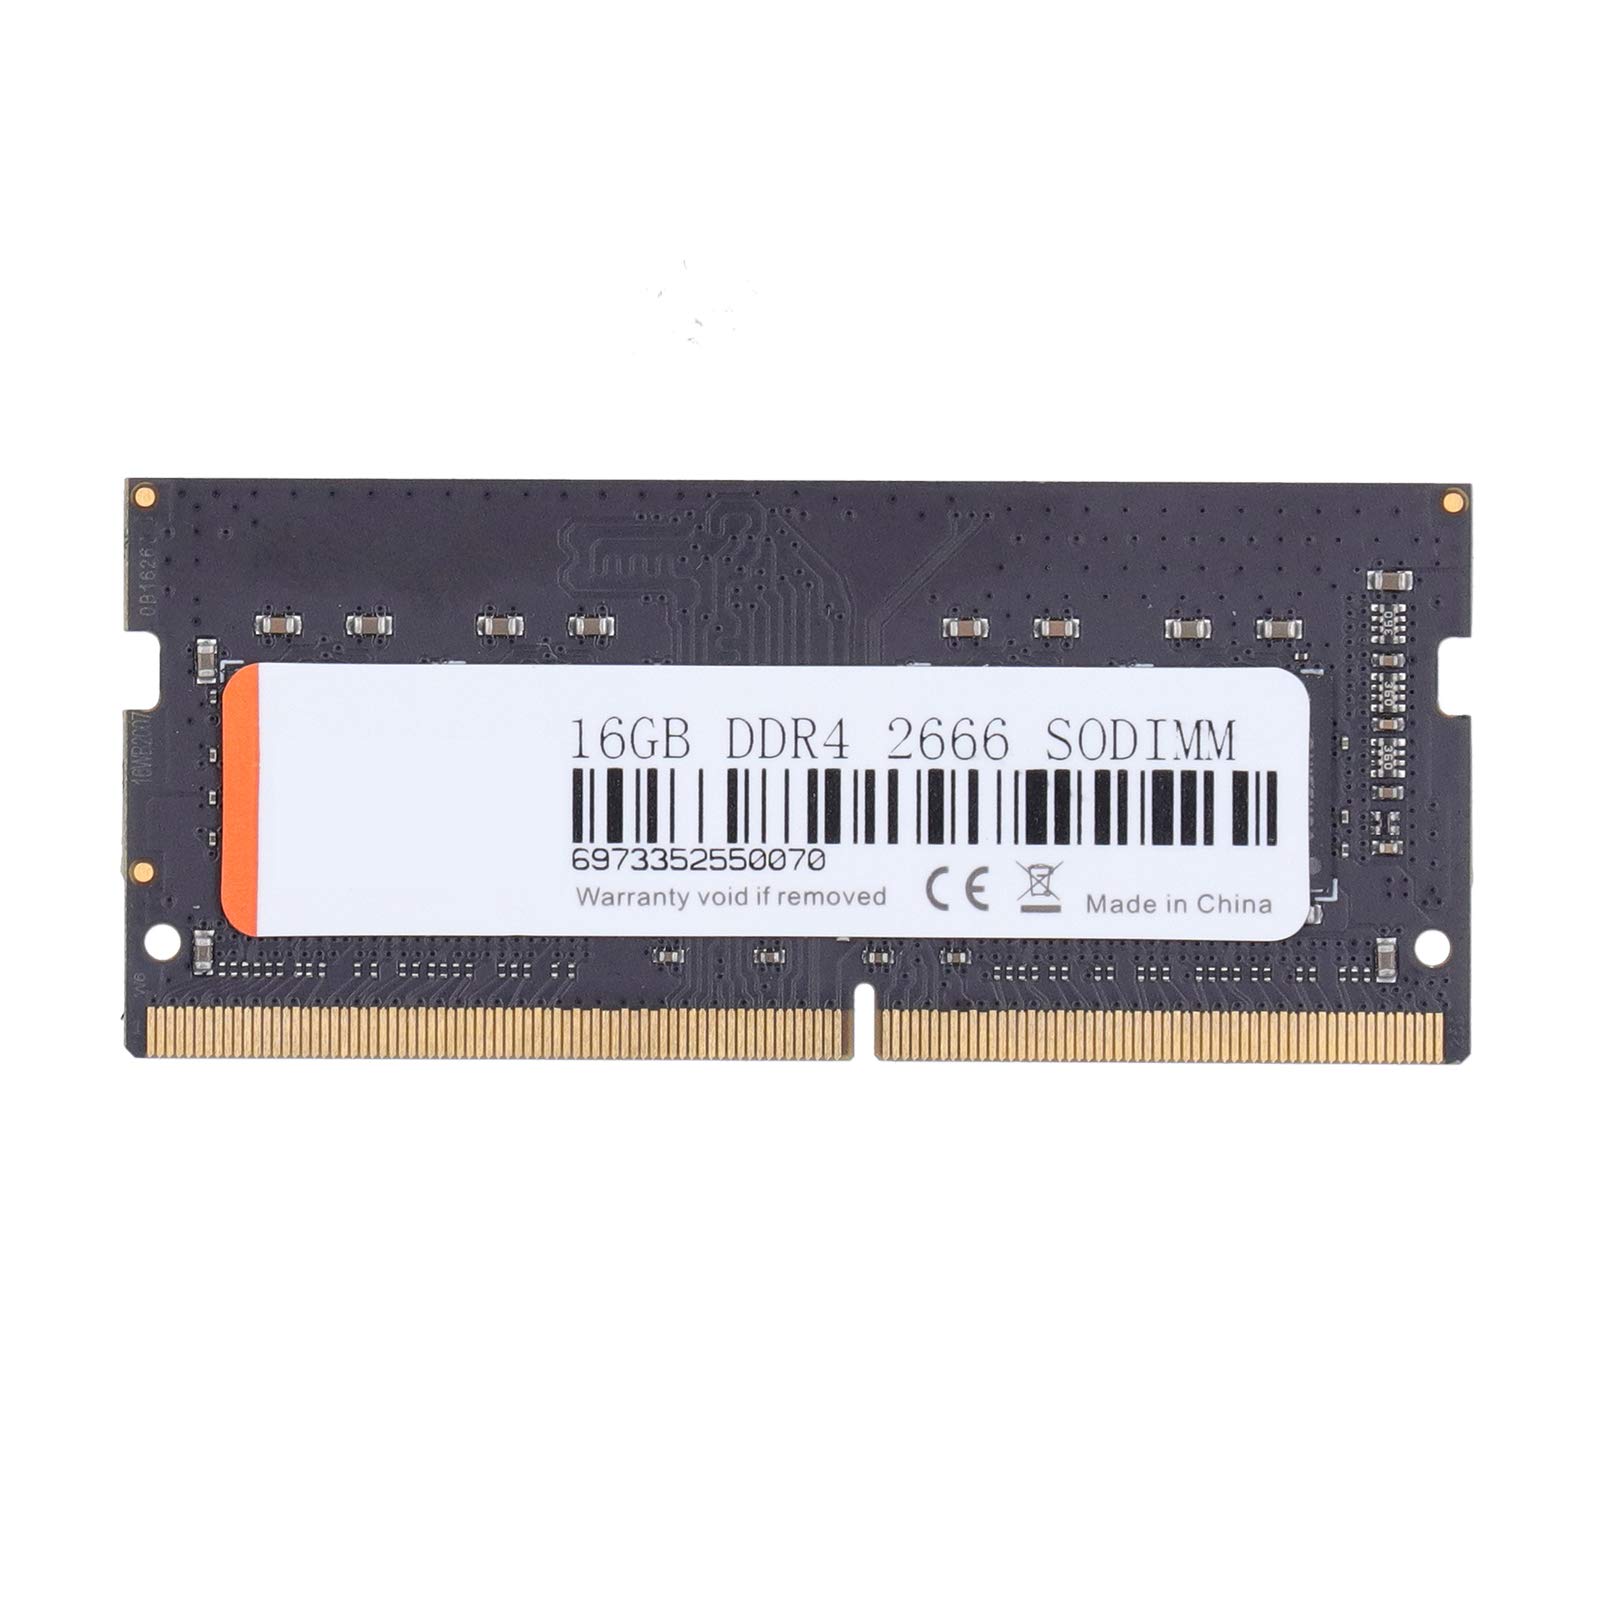 Memory stick or RAM stick.